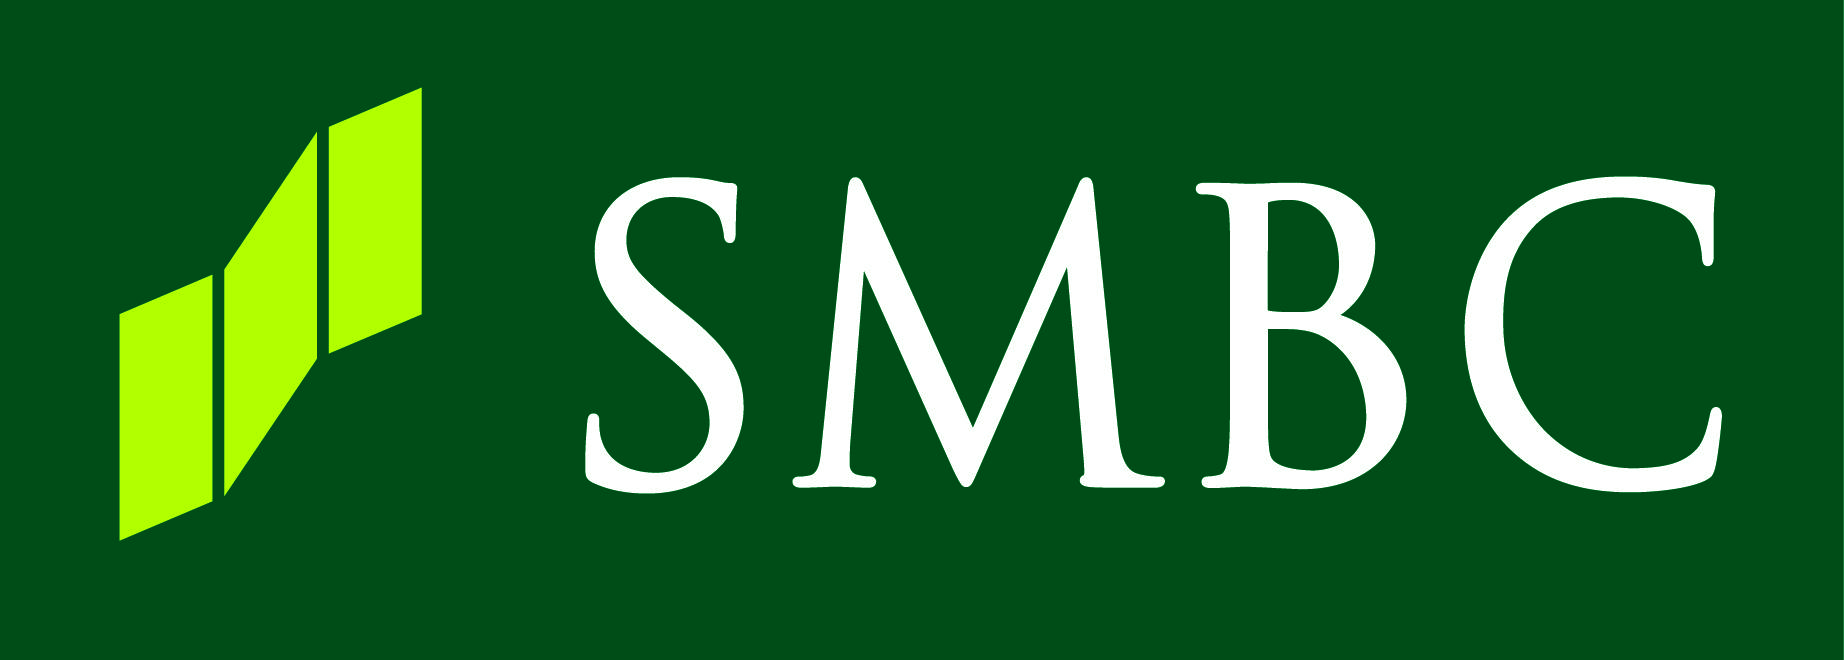 SMBC Logo - smbc-logo-only-1-CMYK - The Oil & Gas Conference